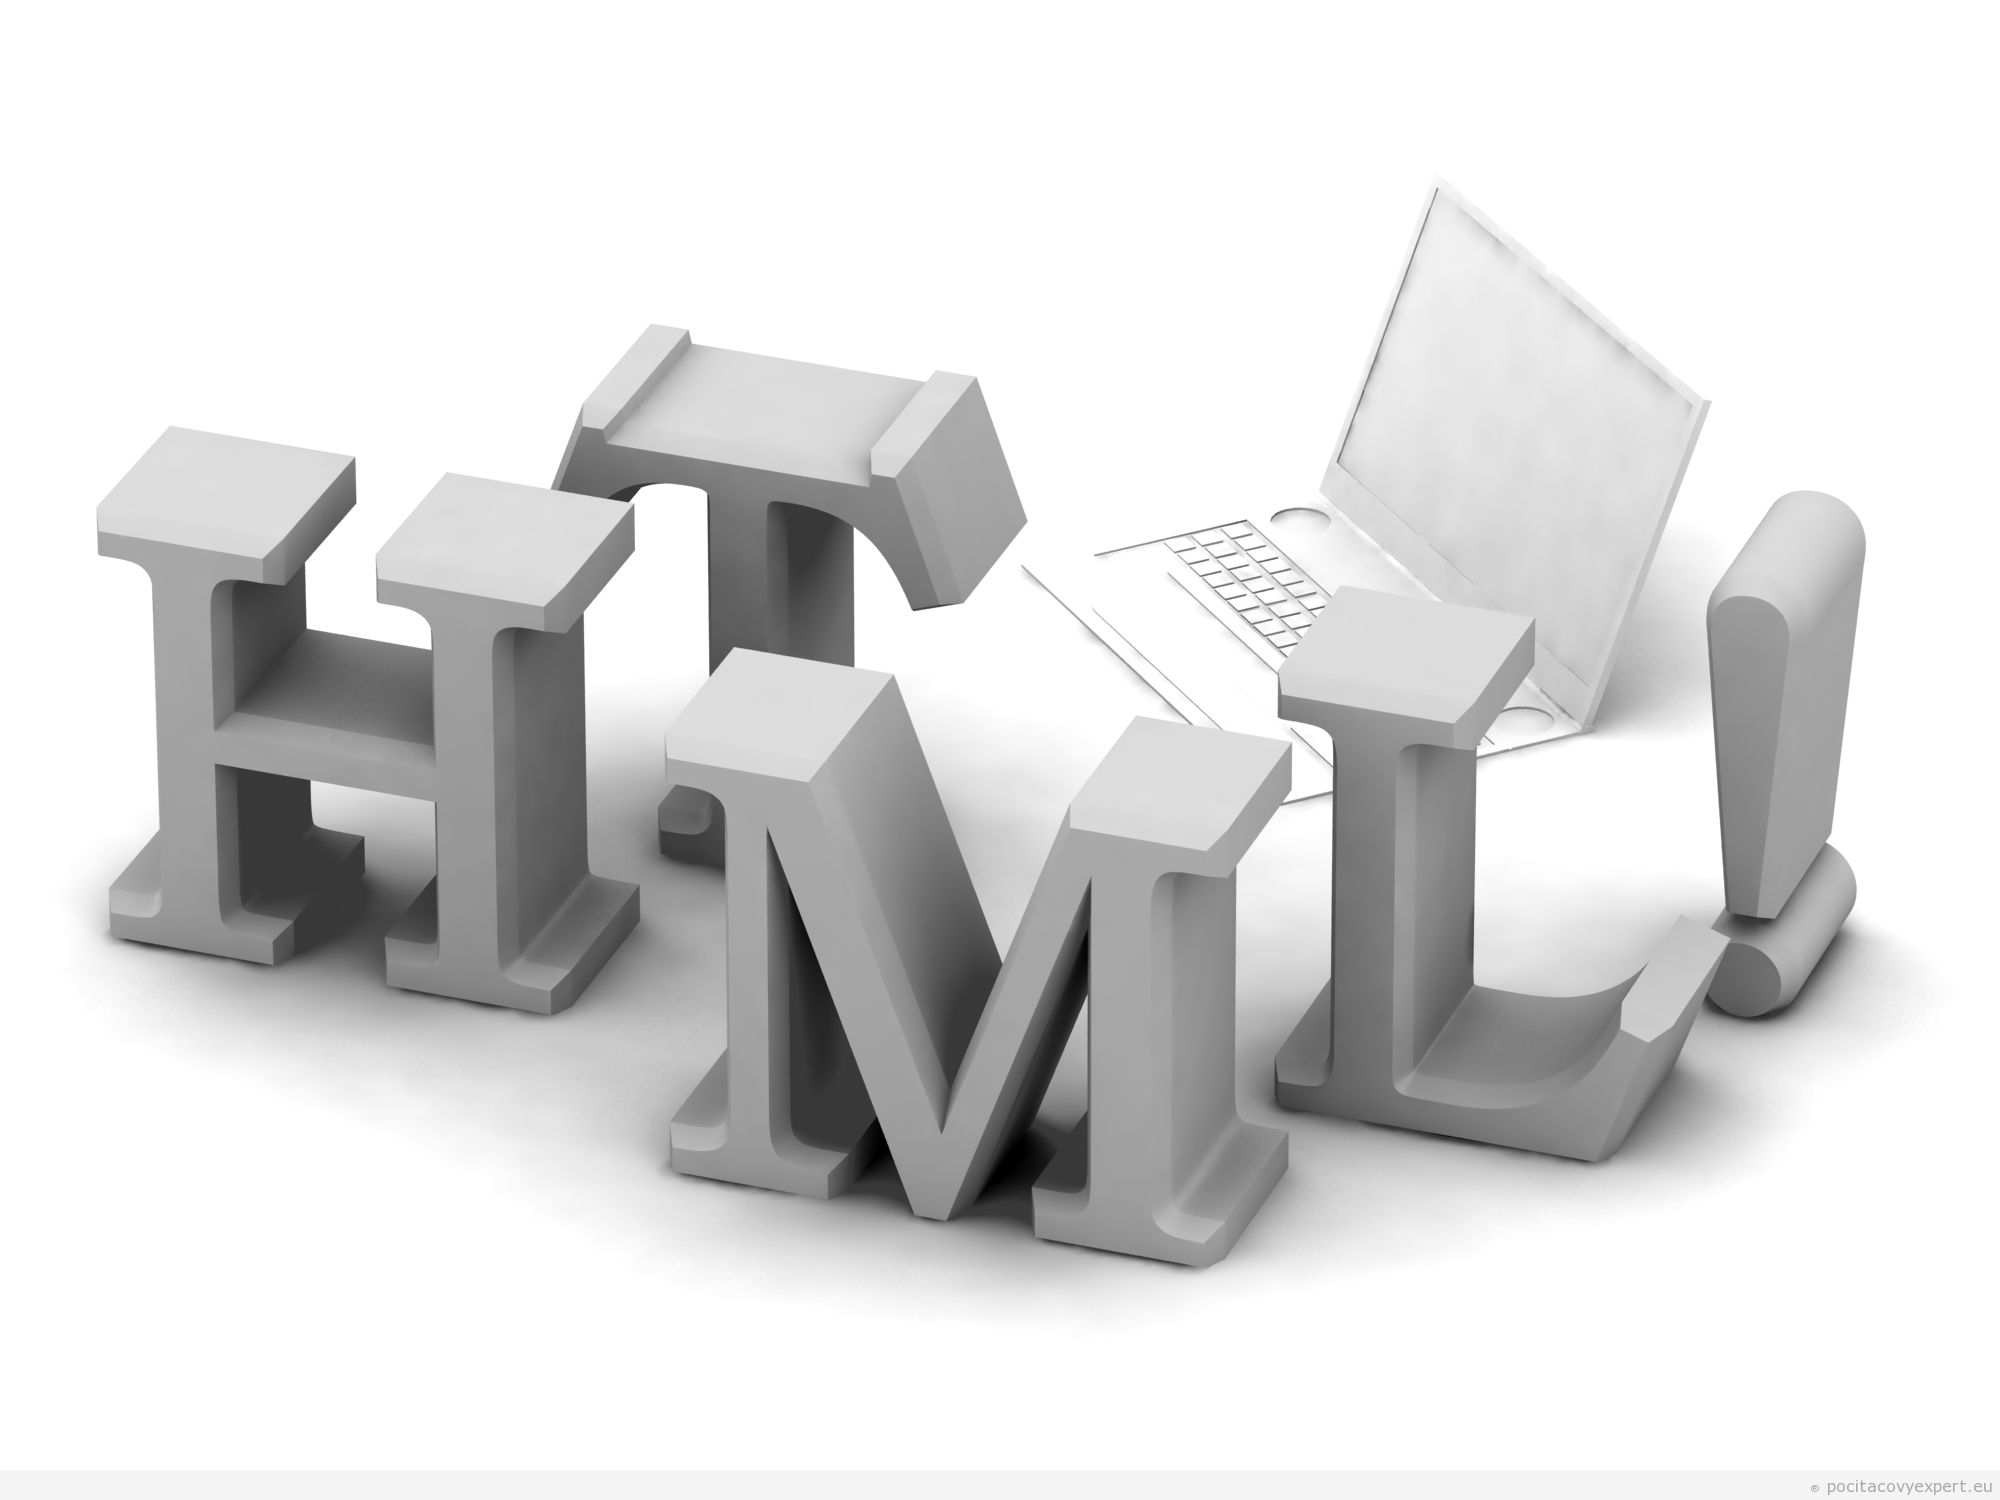 Vytvorenie dokumentu HTML